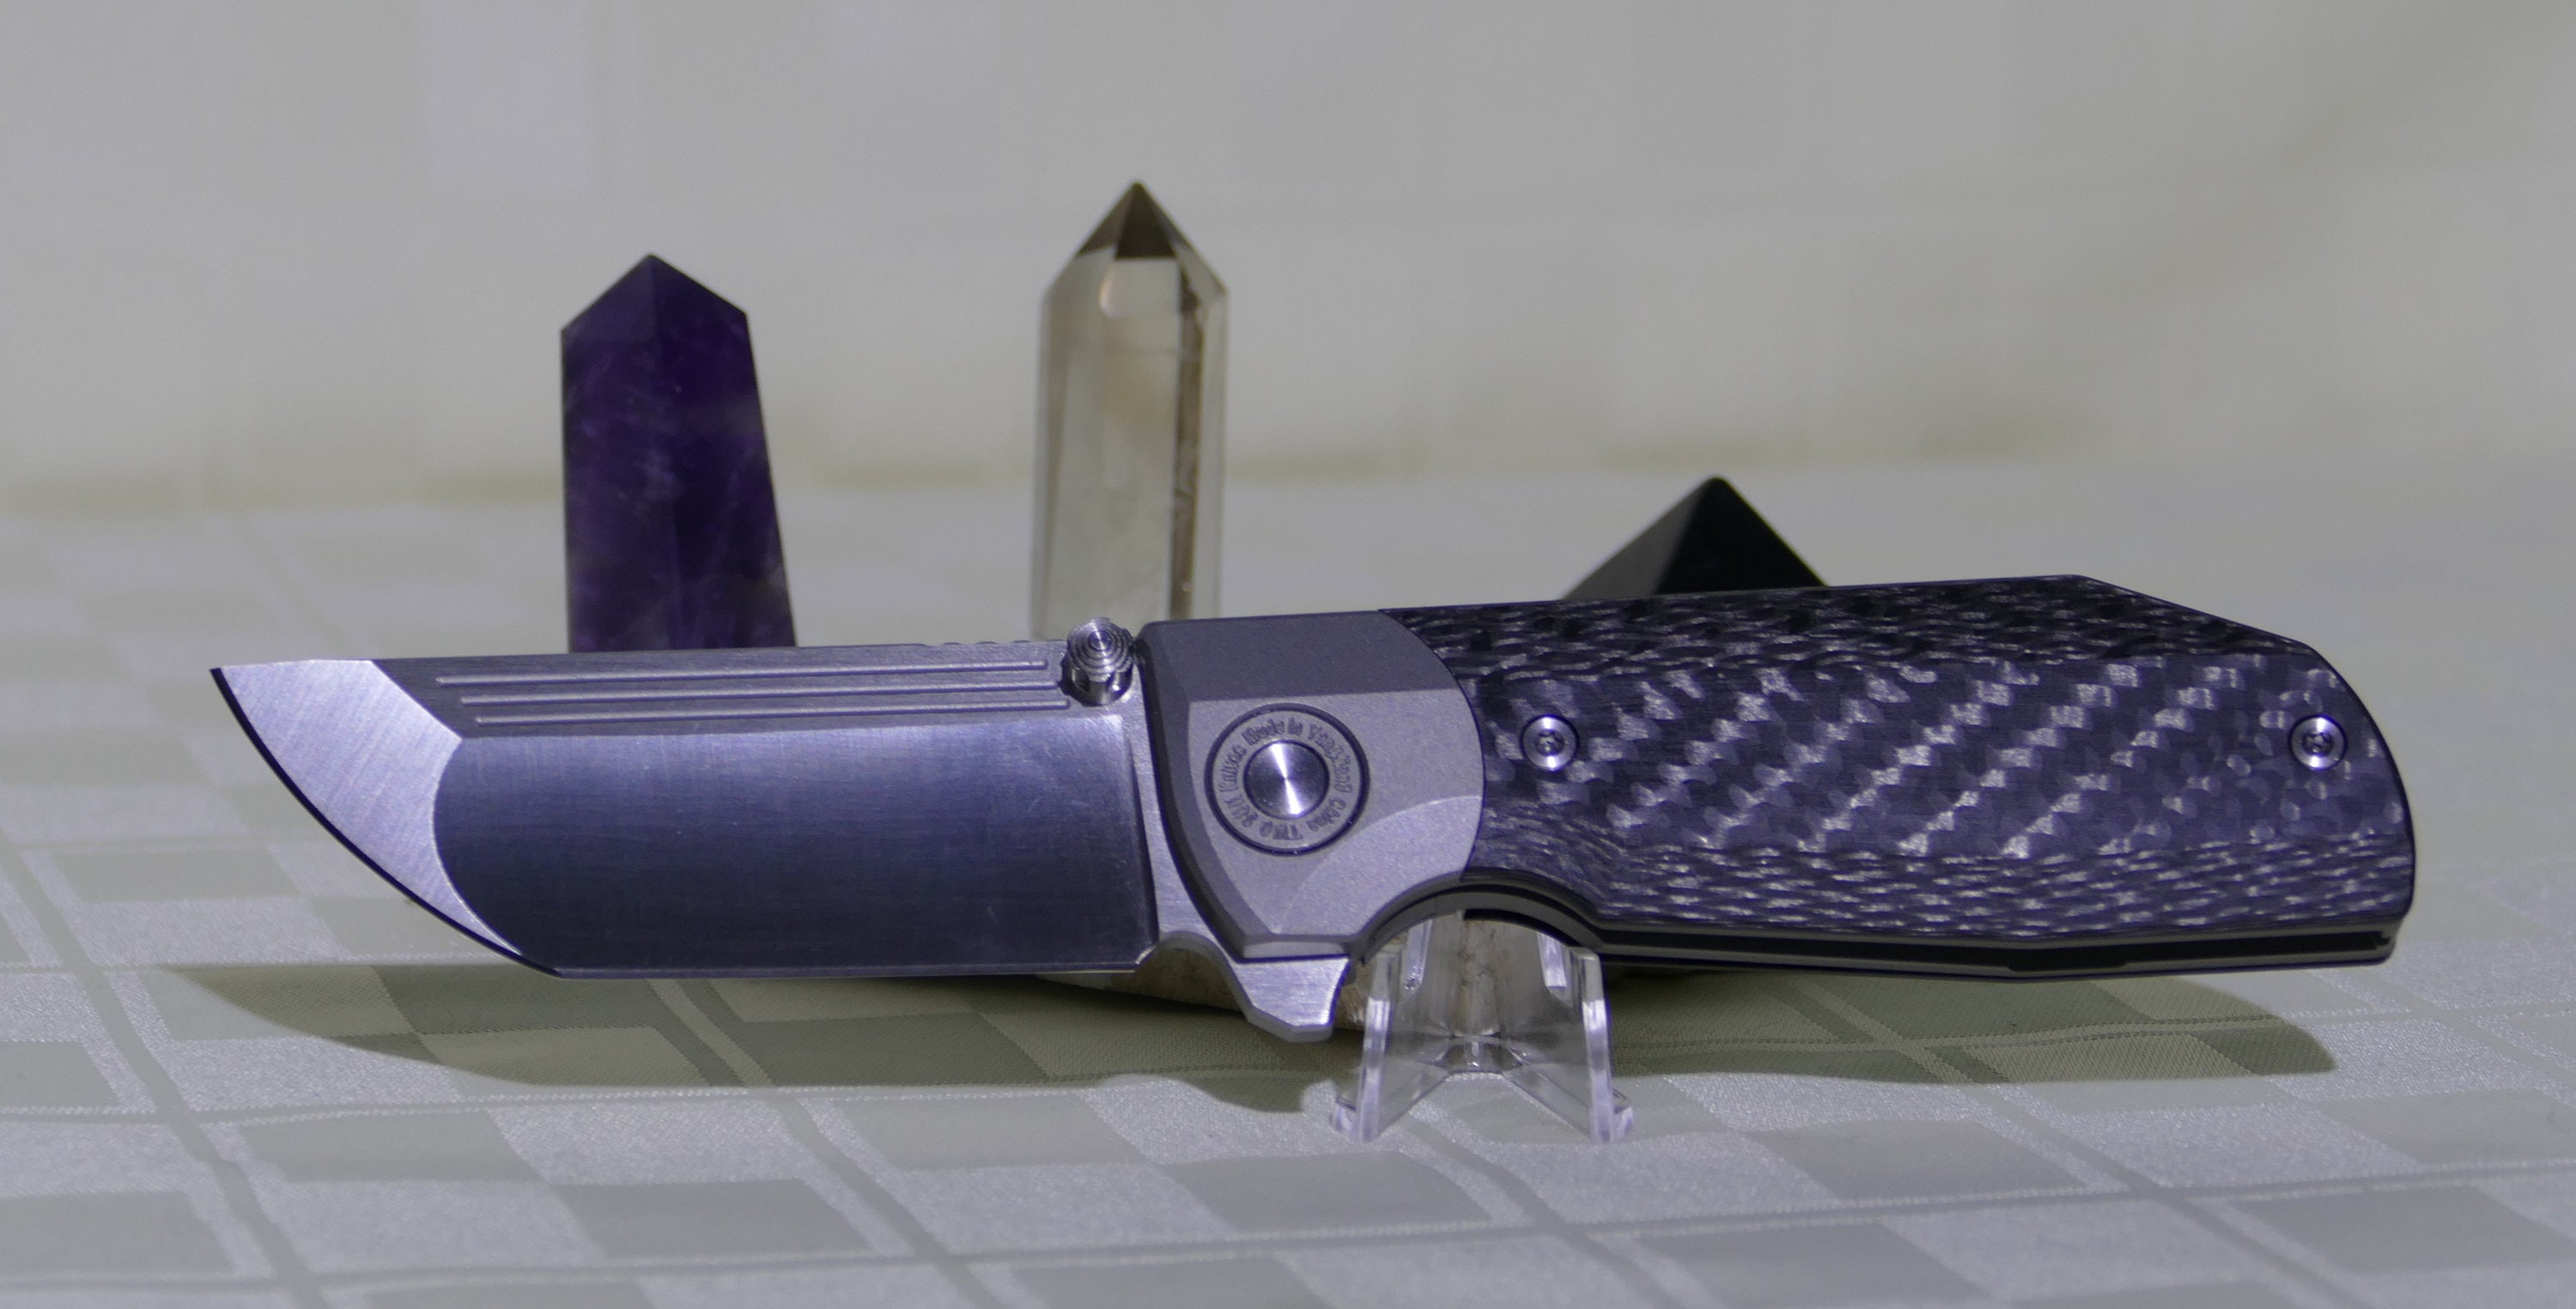  Steinbrucke EDC Knife Pocket Knife for Men - 3.4'' Sandvik  14C28N Knife Stainless Steel Serrated Blade; G10 Aluminum Handle with Glass  Breaker, Reversible Pocket Clip for Camping, Outdoor, Men Gifts 